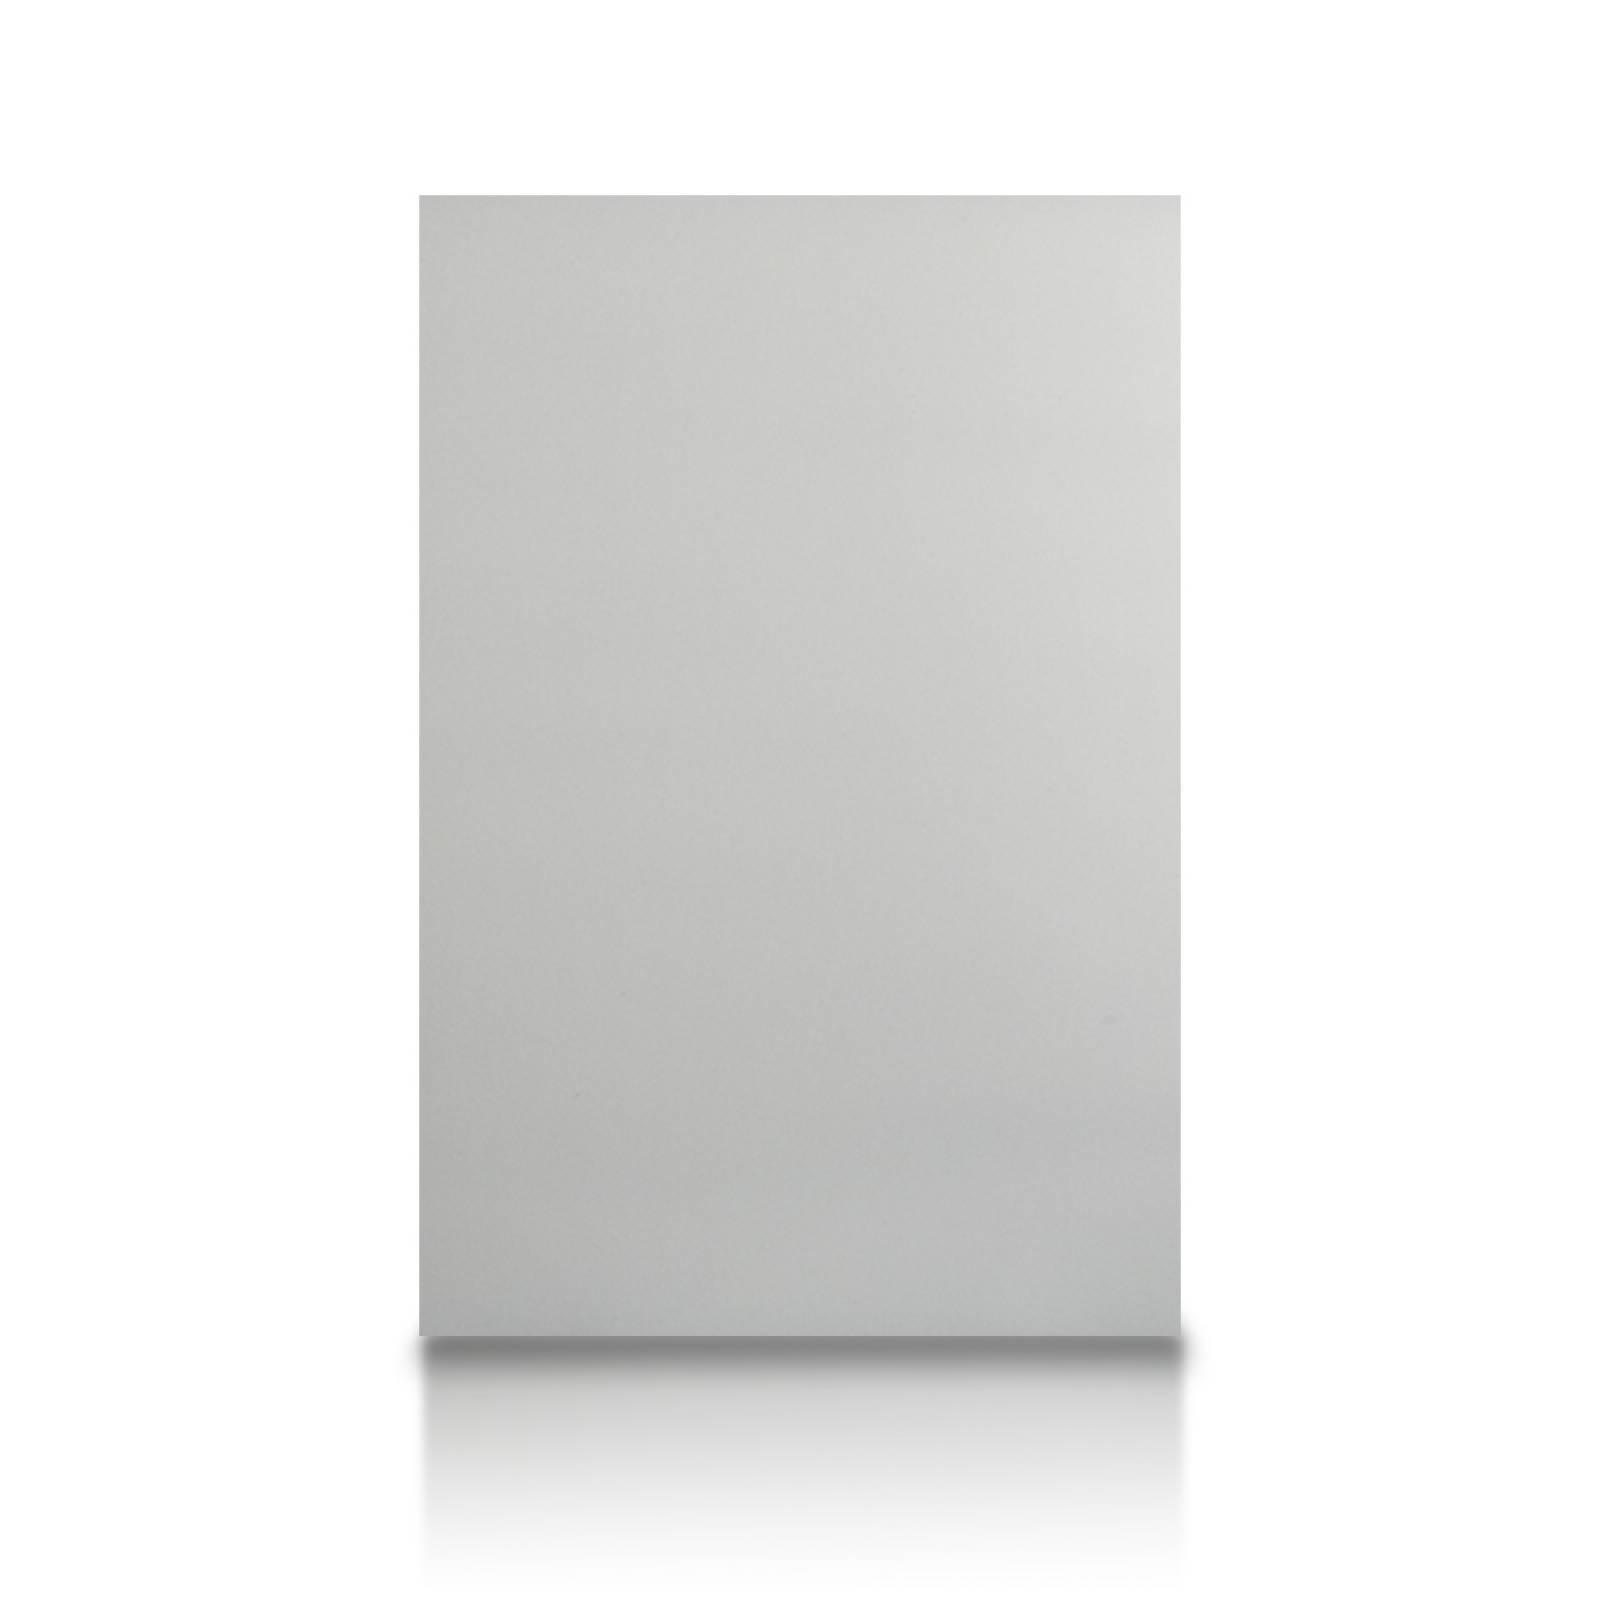 Aislante Cerámico Protector Térmico para Techo de 60 x 90 cm Blanco, Mod: 3PTTBl